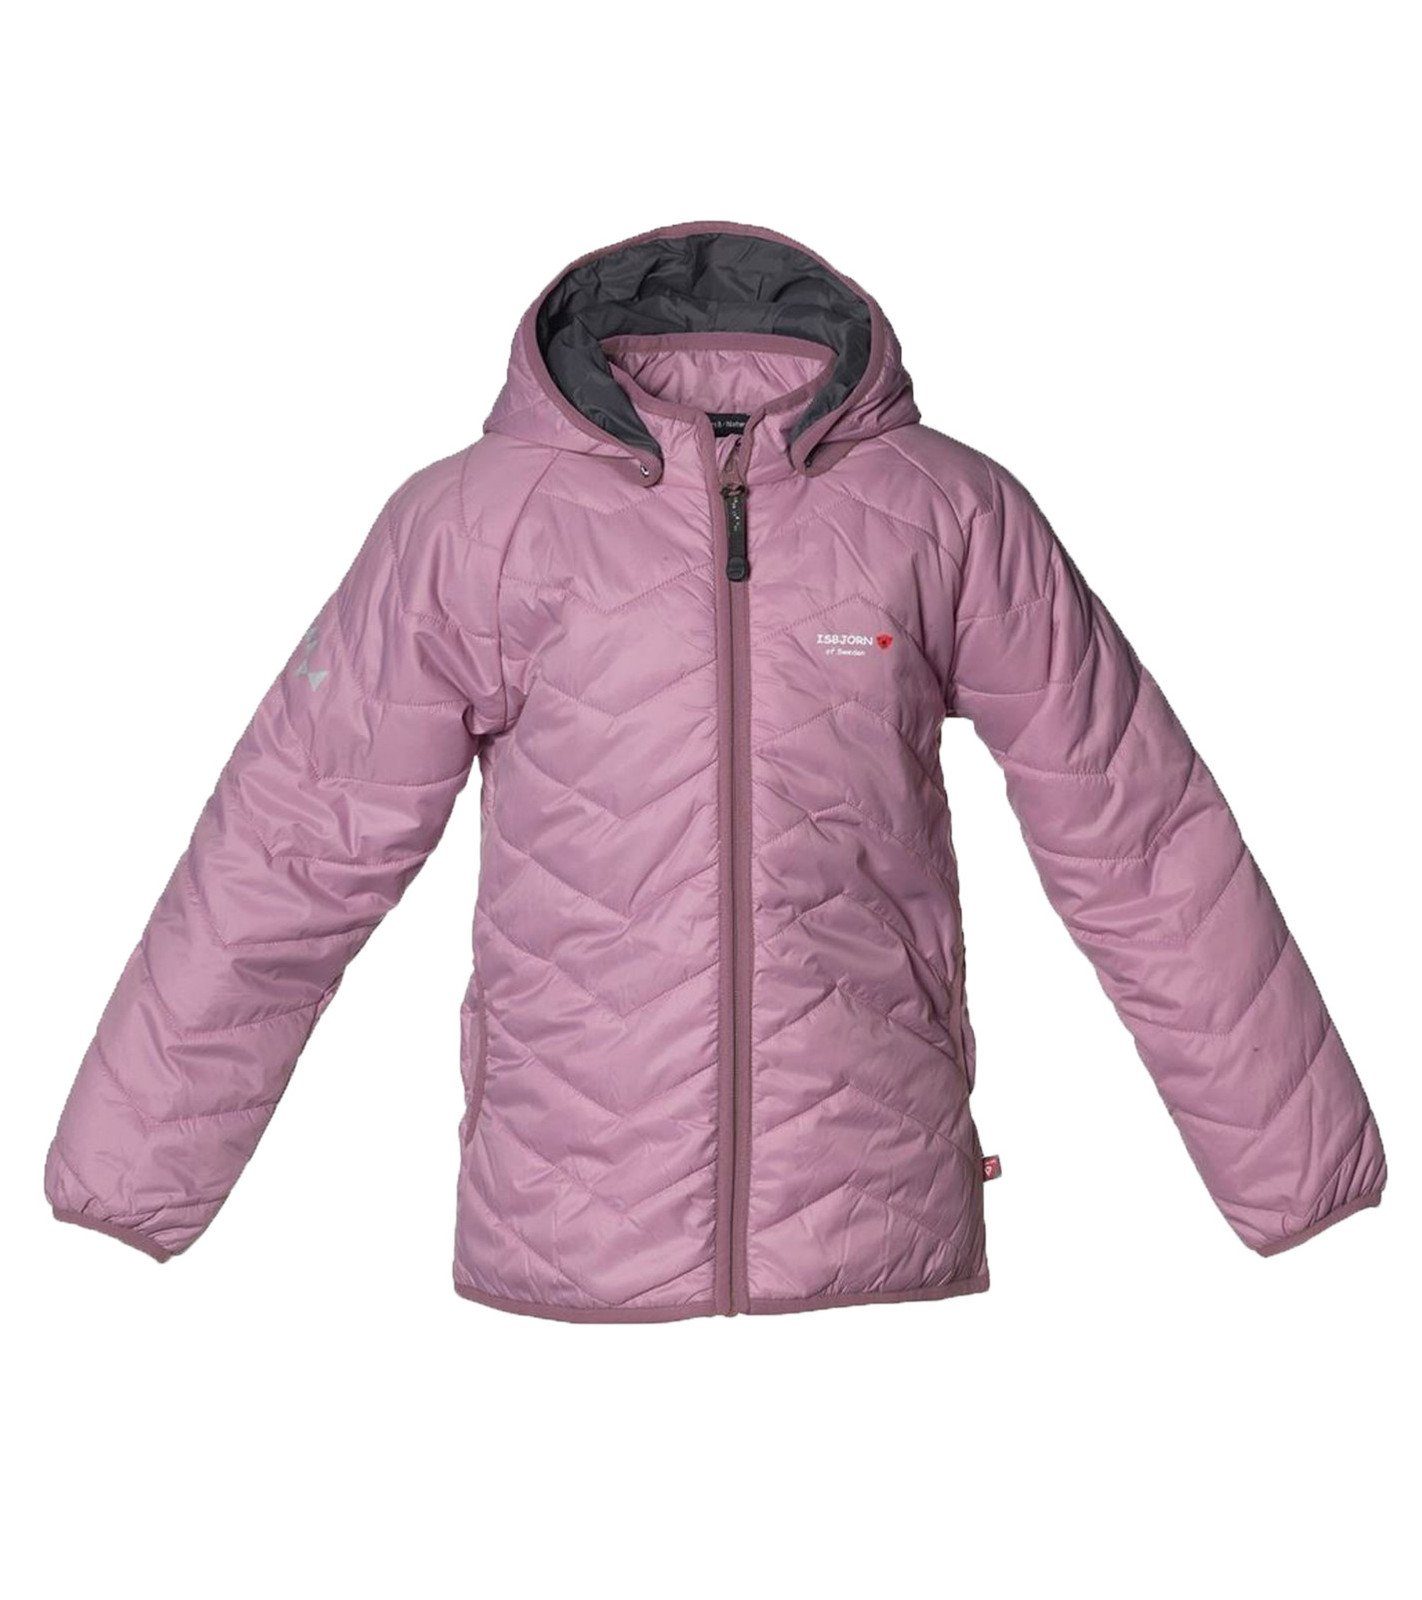 Isbjörn Softshelljacke »ISBJÖRN Frost Outdoor-Jacke leichte Kinder  Softshell-Jacke Regen-Jacke mit Kapuze Rosa« online kaufen | OTTO